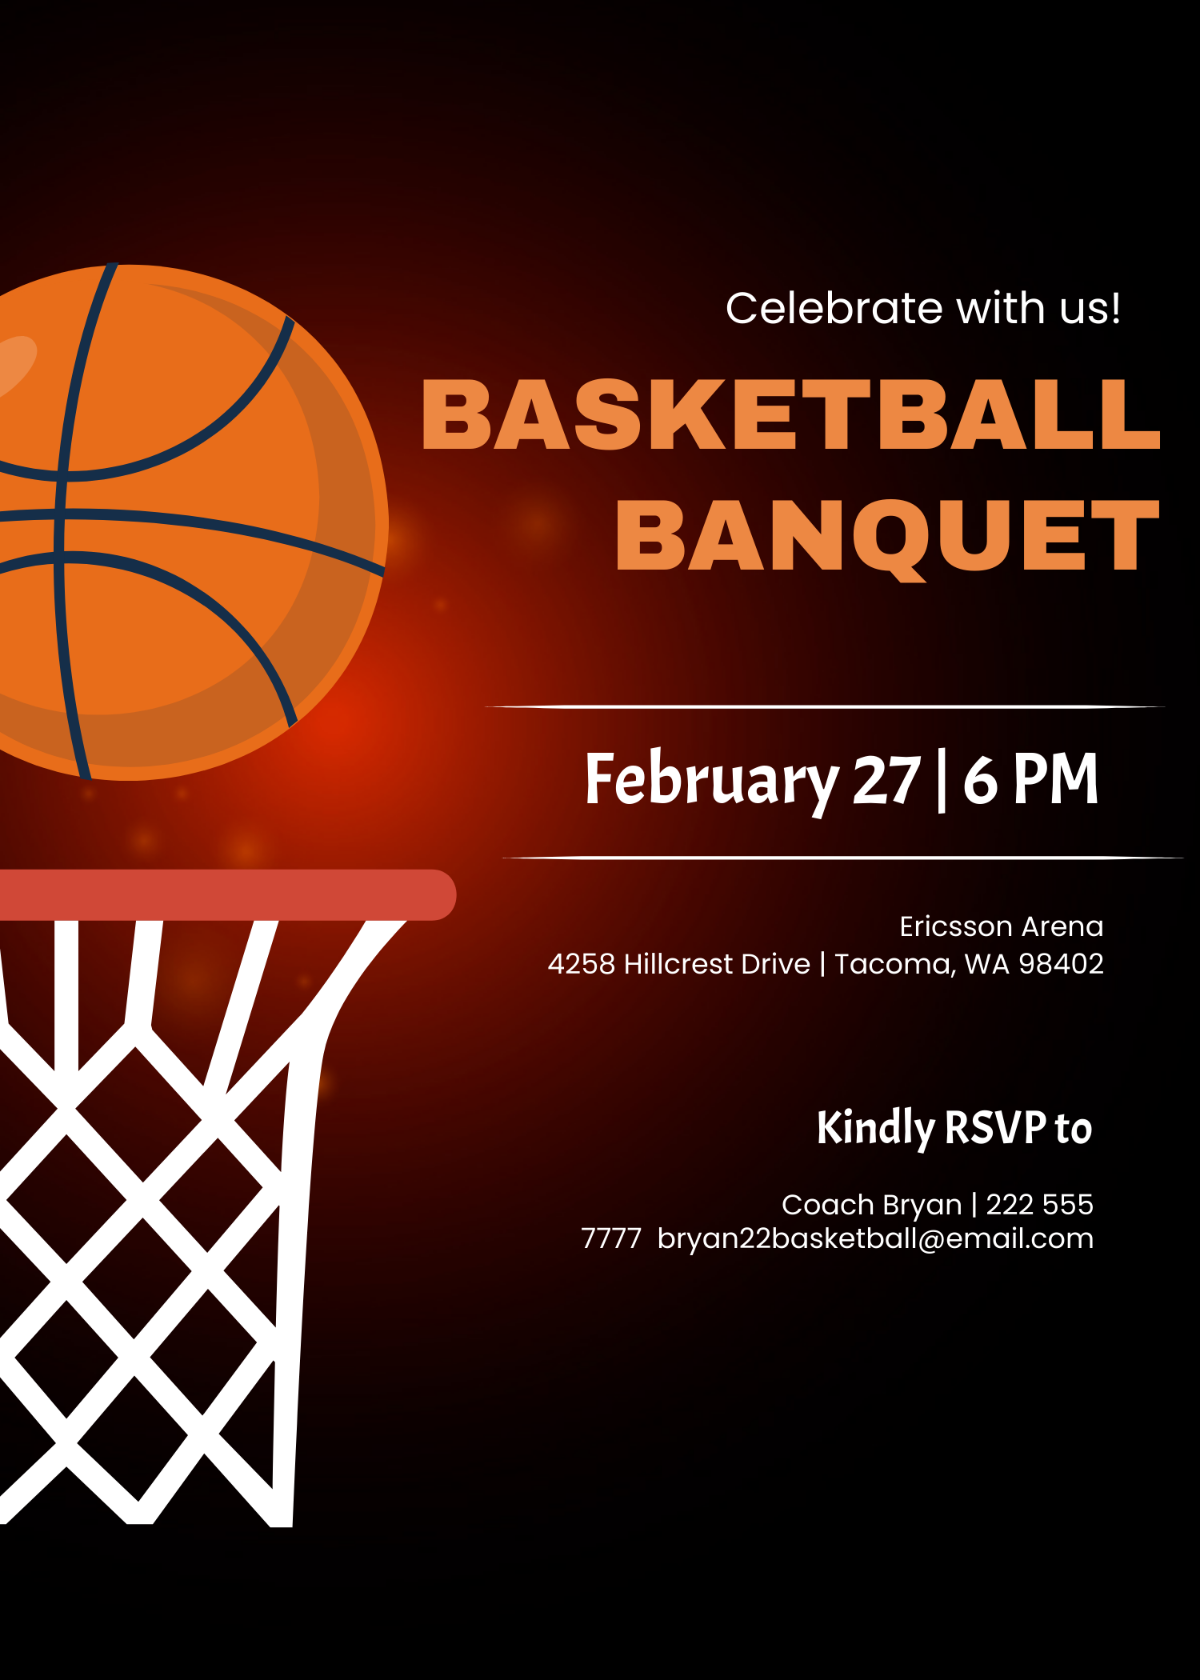 Basketball Banquet Invitation